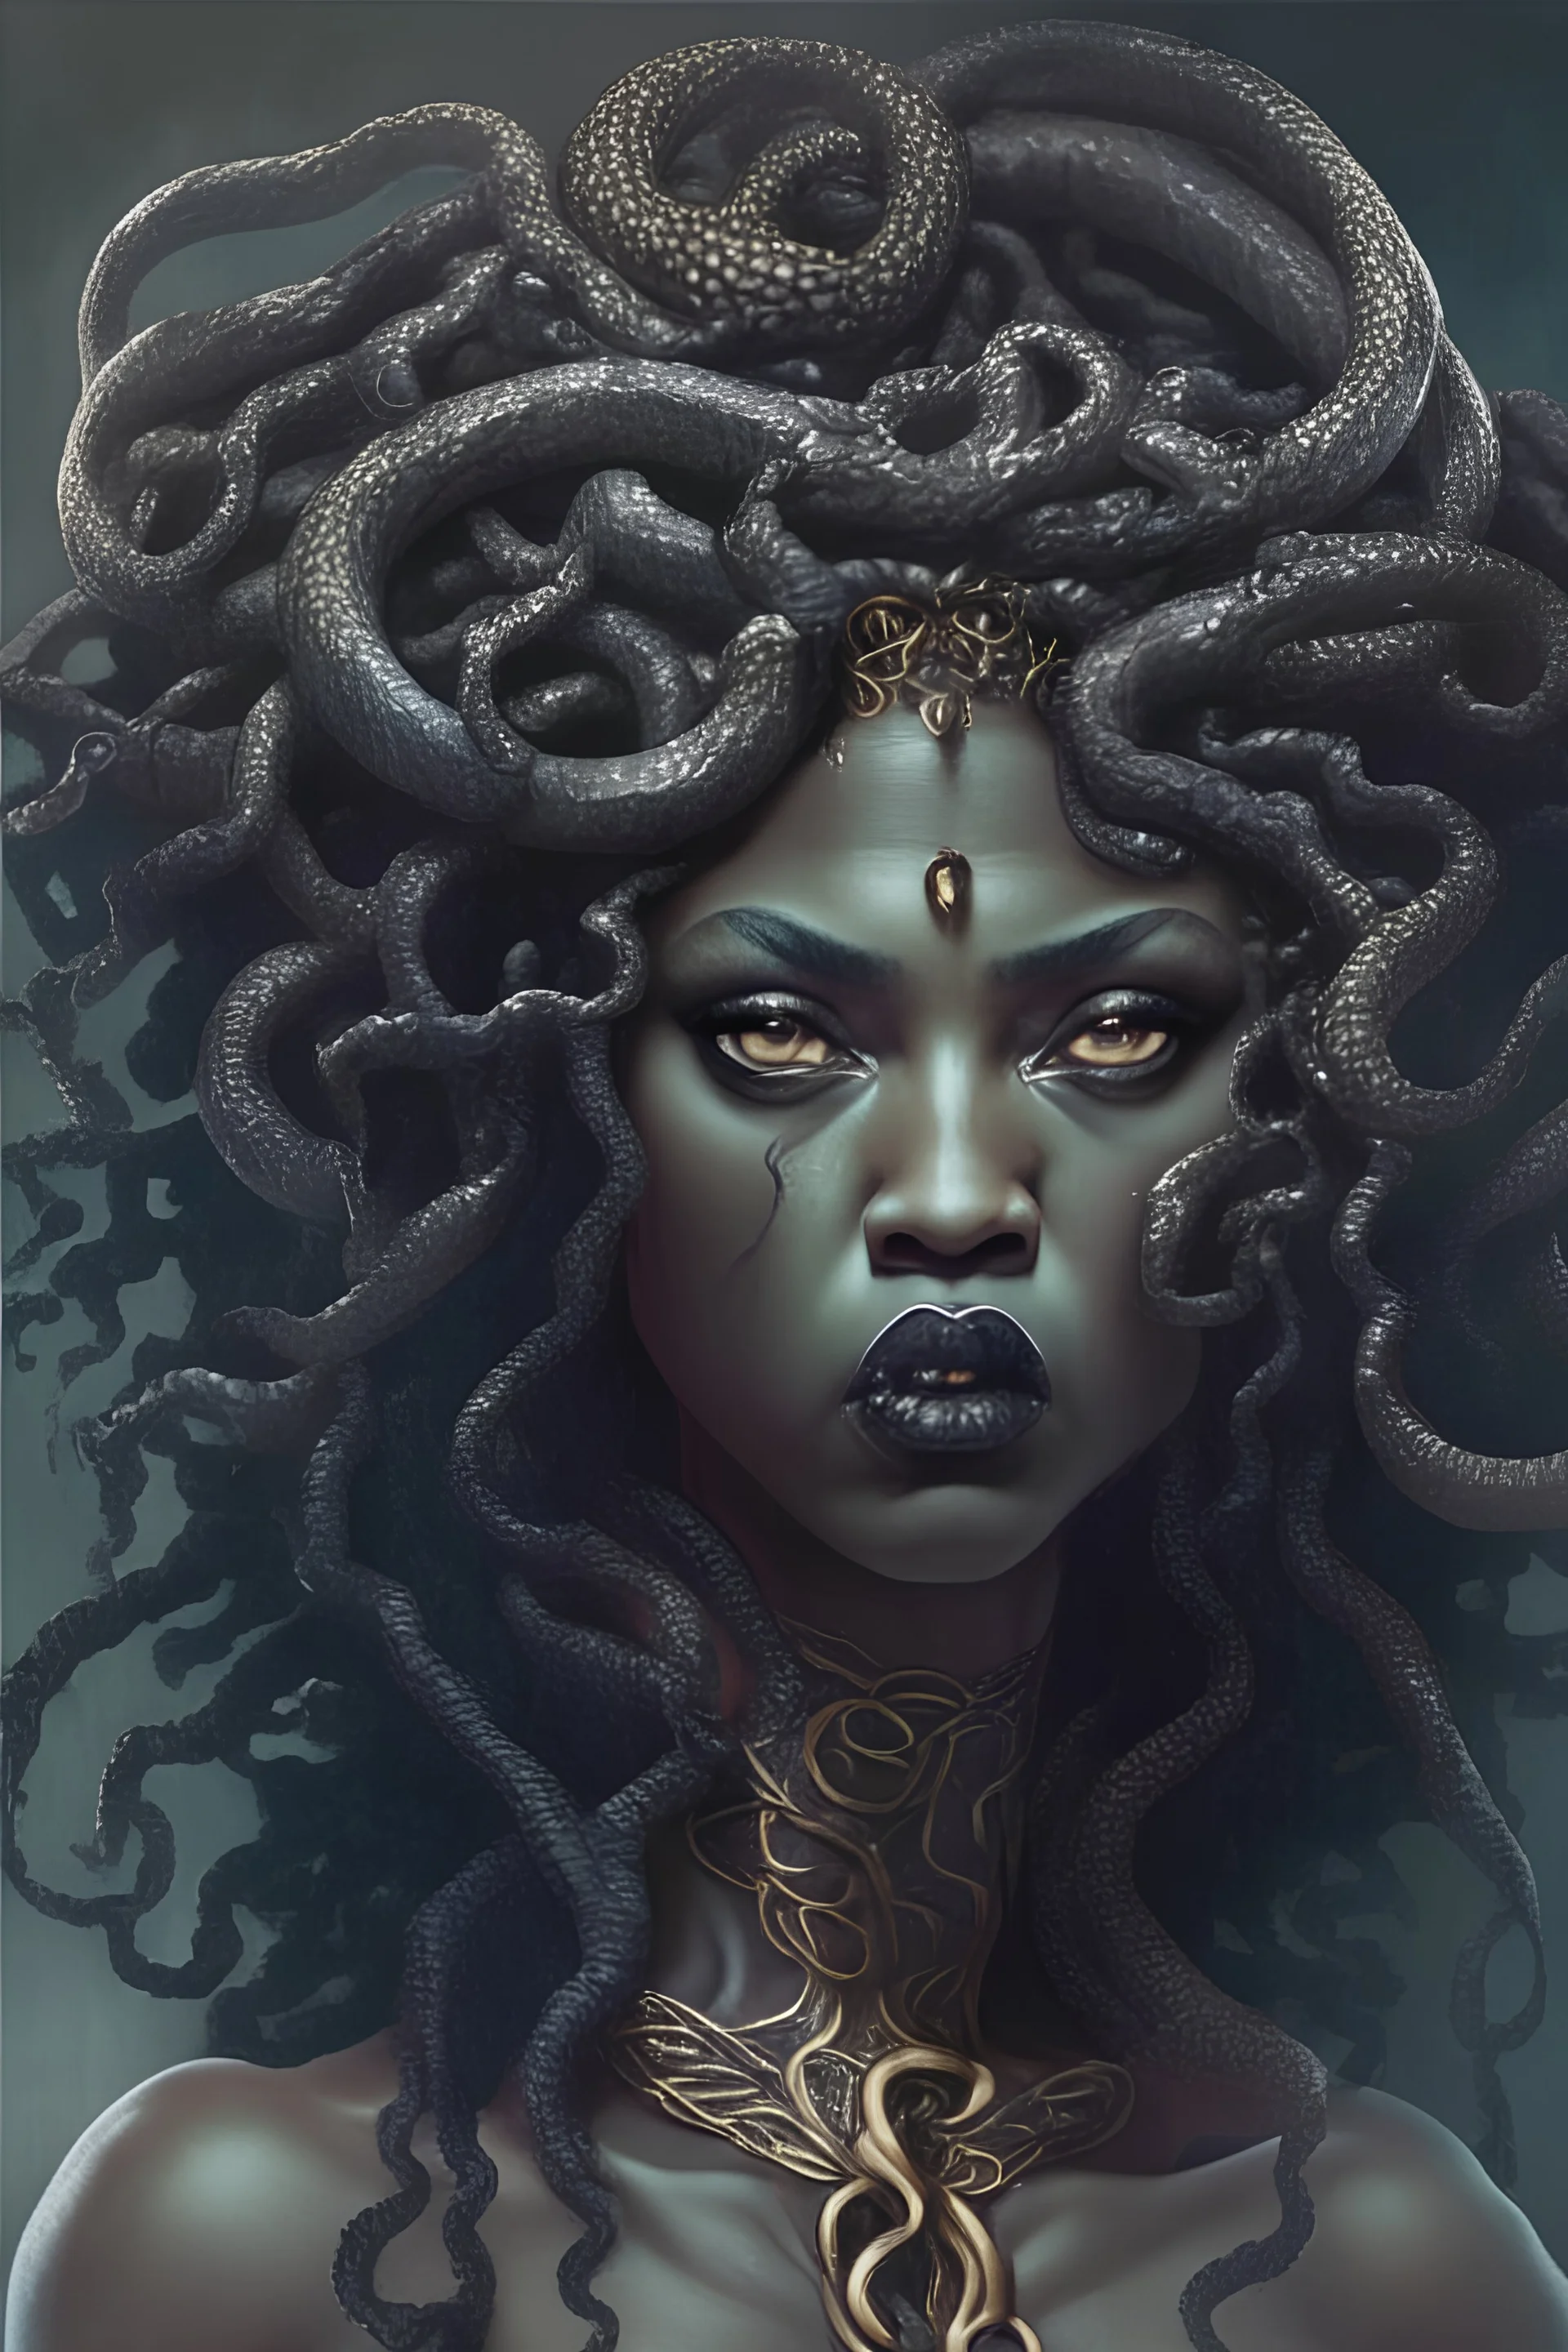 Medusa as a beautiful black woman